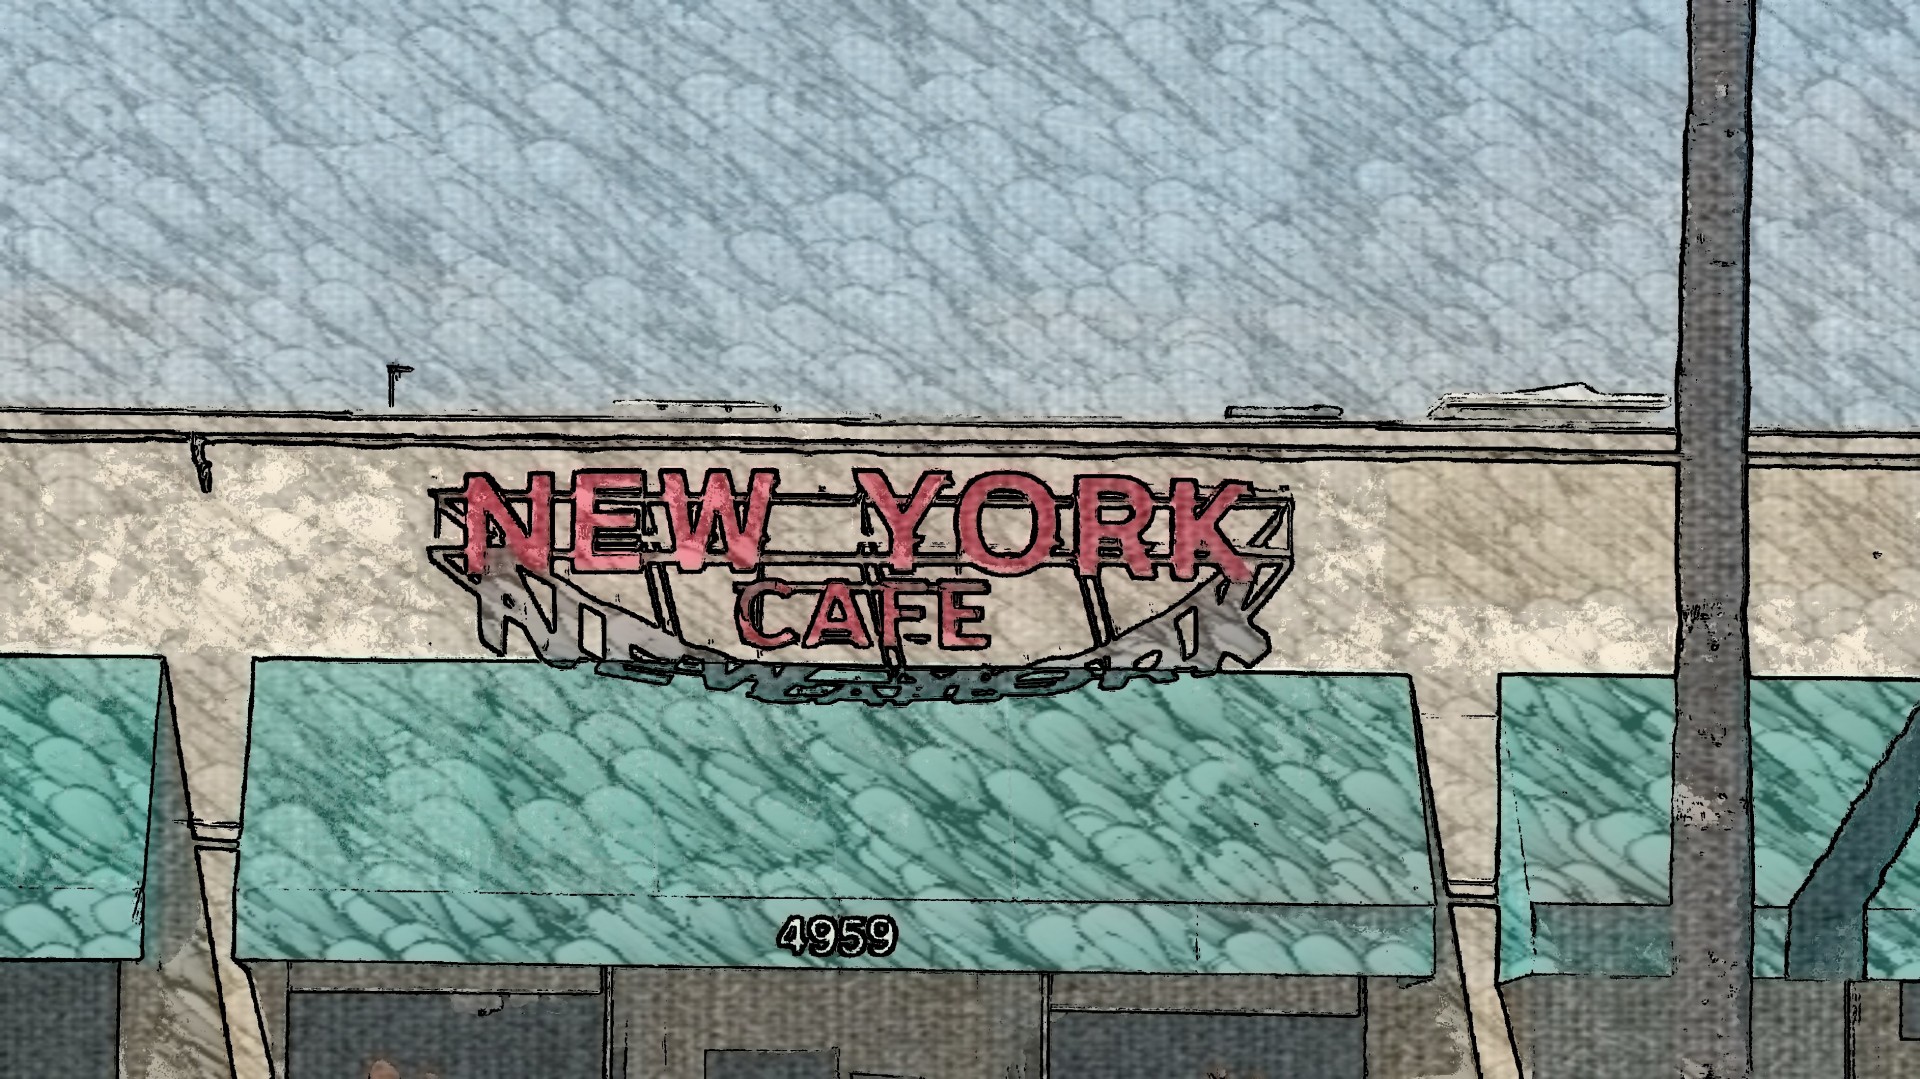 new york cafe testaurant free photo